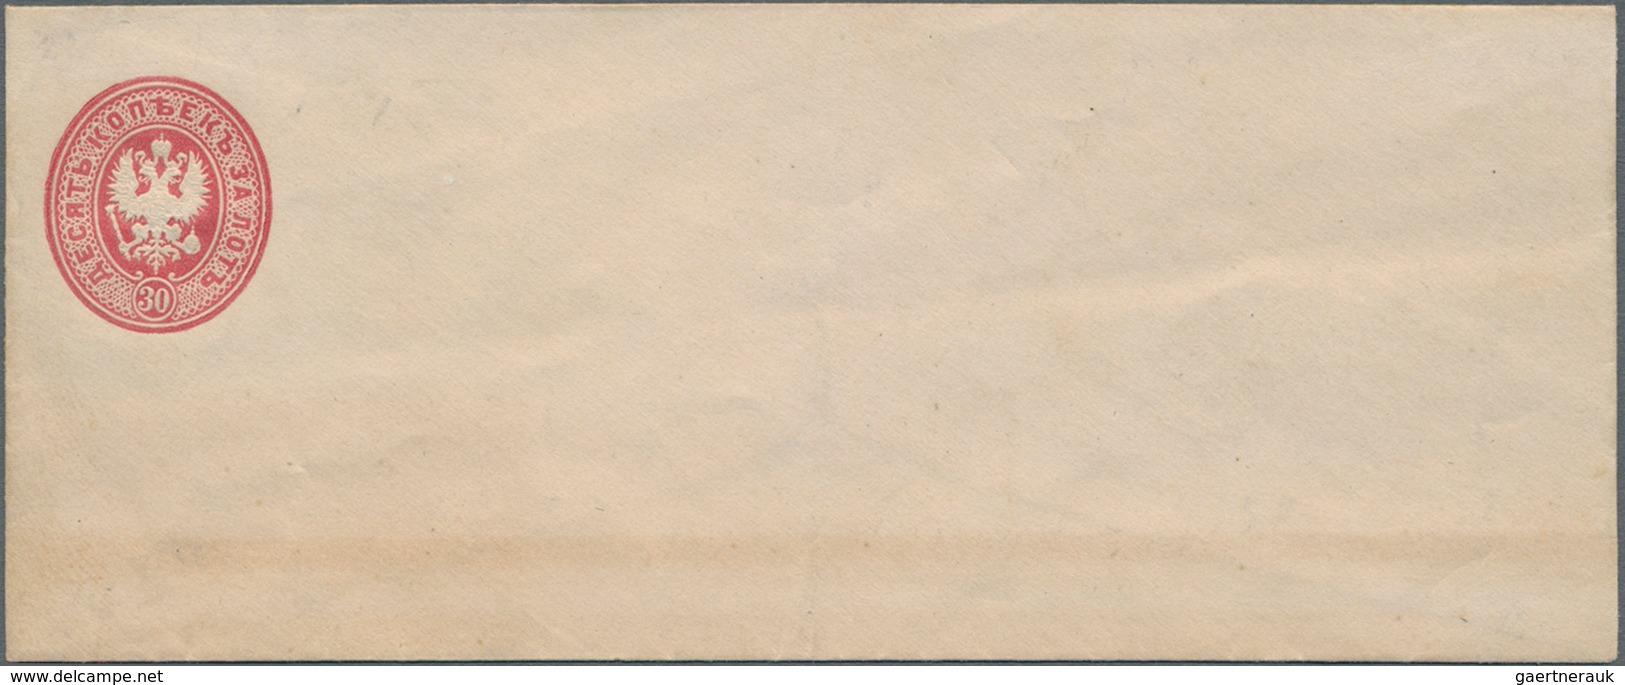 15978 Russland - Ganzsachen: 1868, Stationery Envelope 30 Kop Red In Not Issued Small Size 140x58 Mm, Mint - Ganzsachen